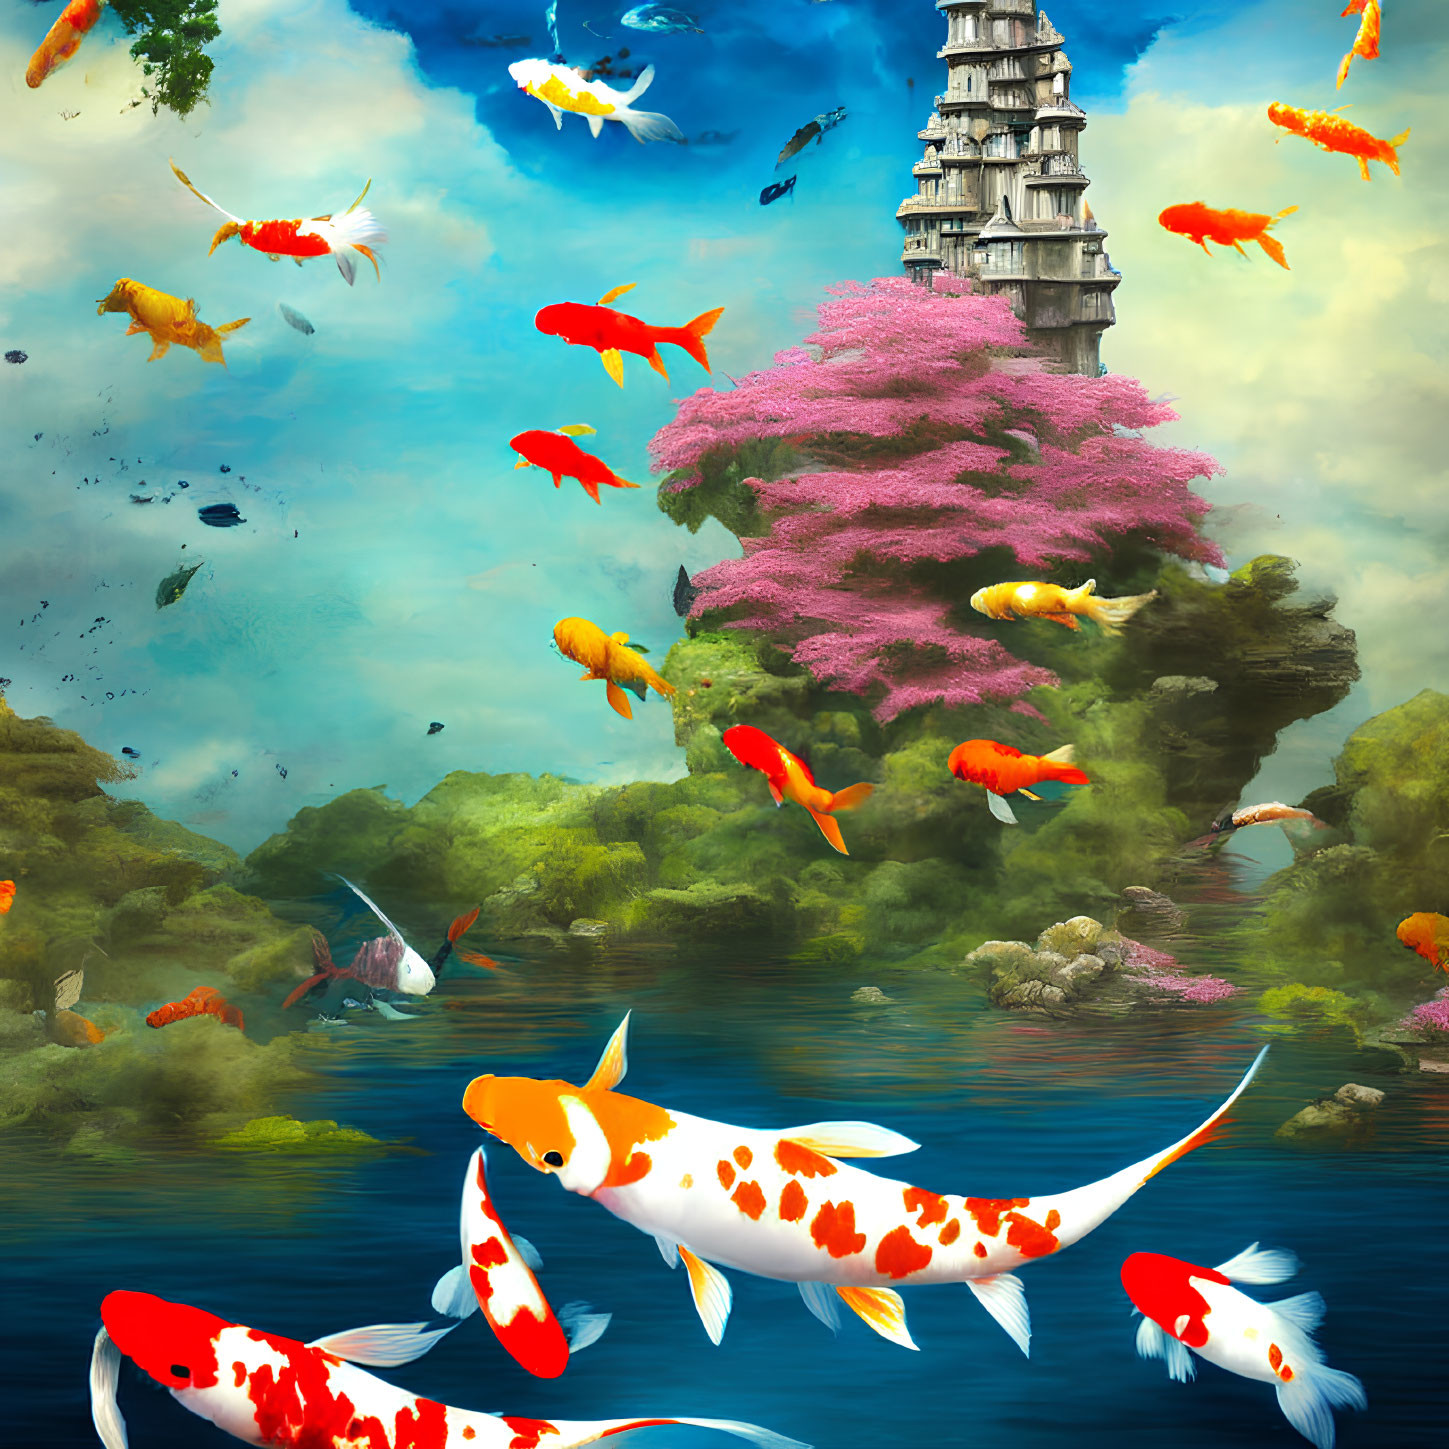 Colorful Koi Fish and Pagoda in Underwater Scene